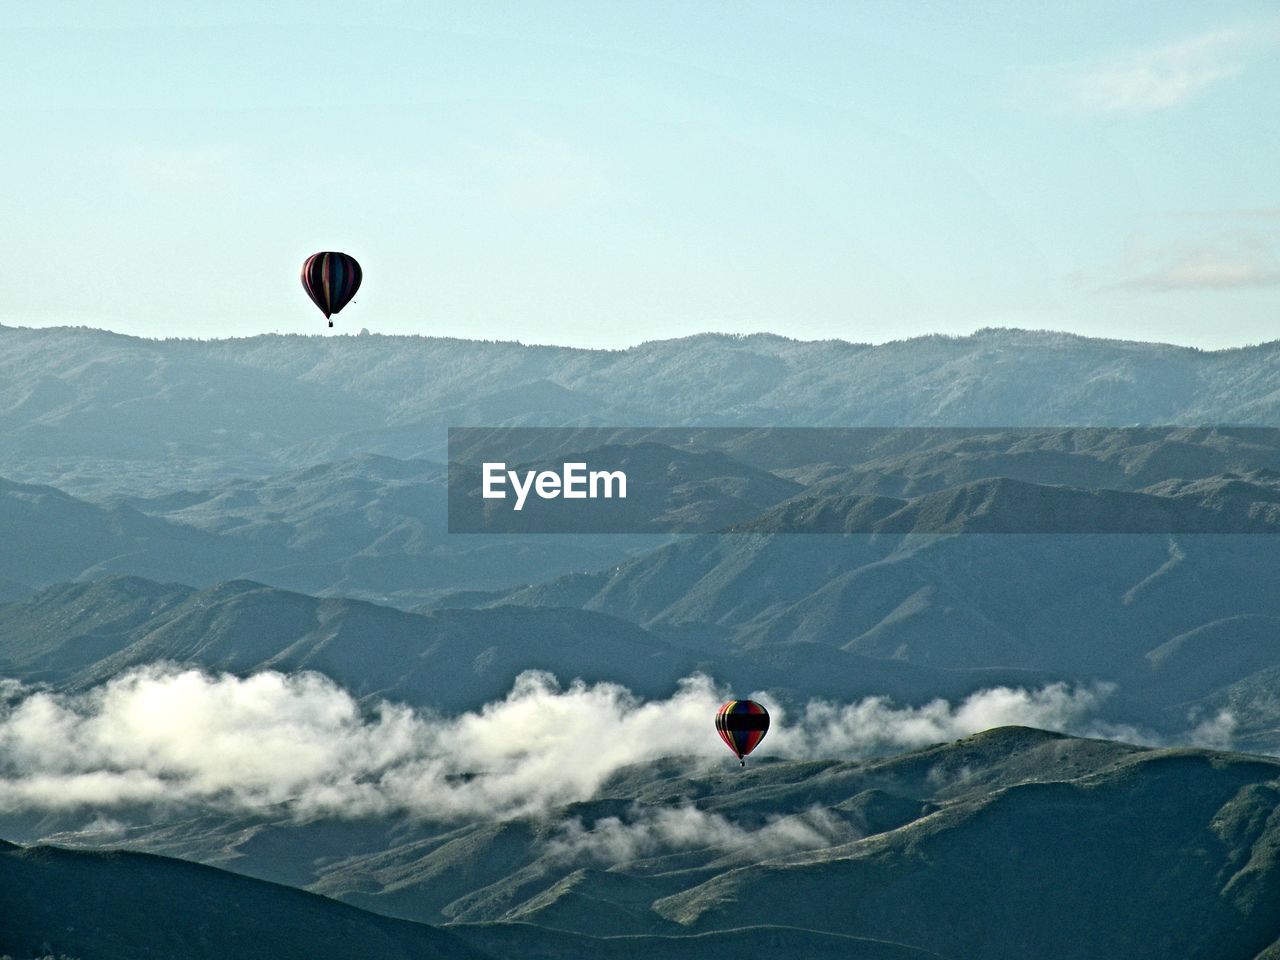 Kite flying over mountains against sky